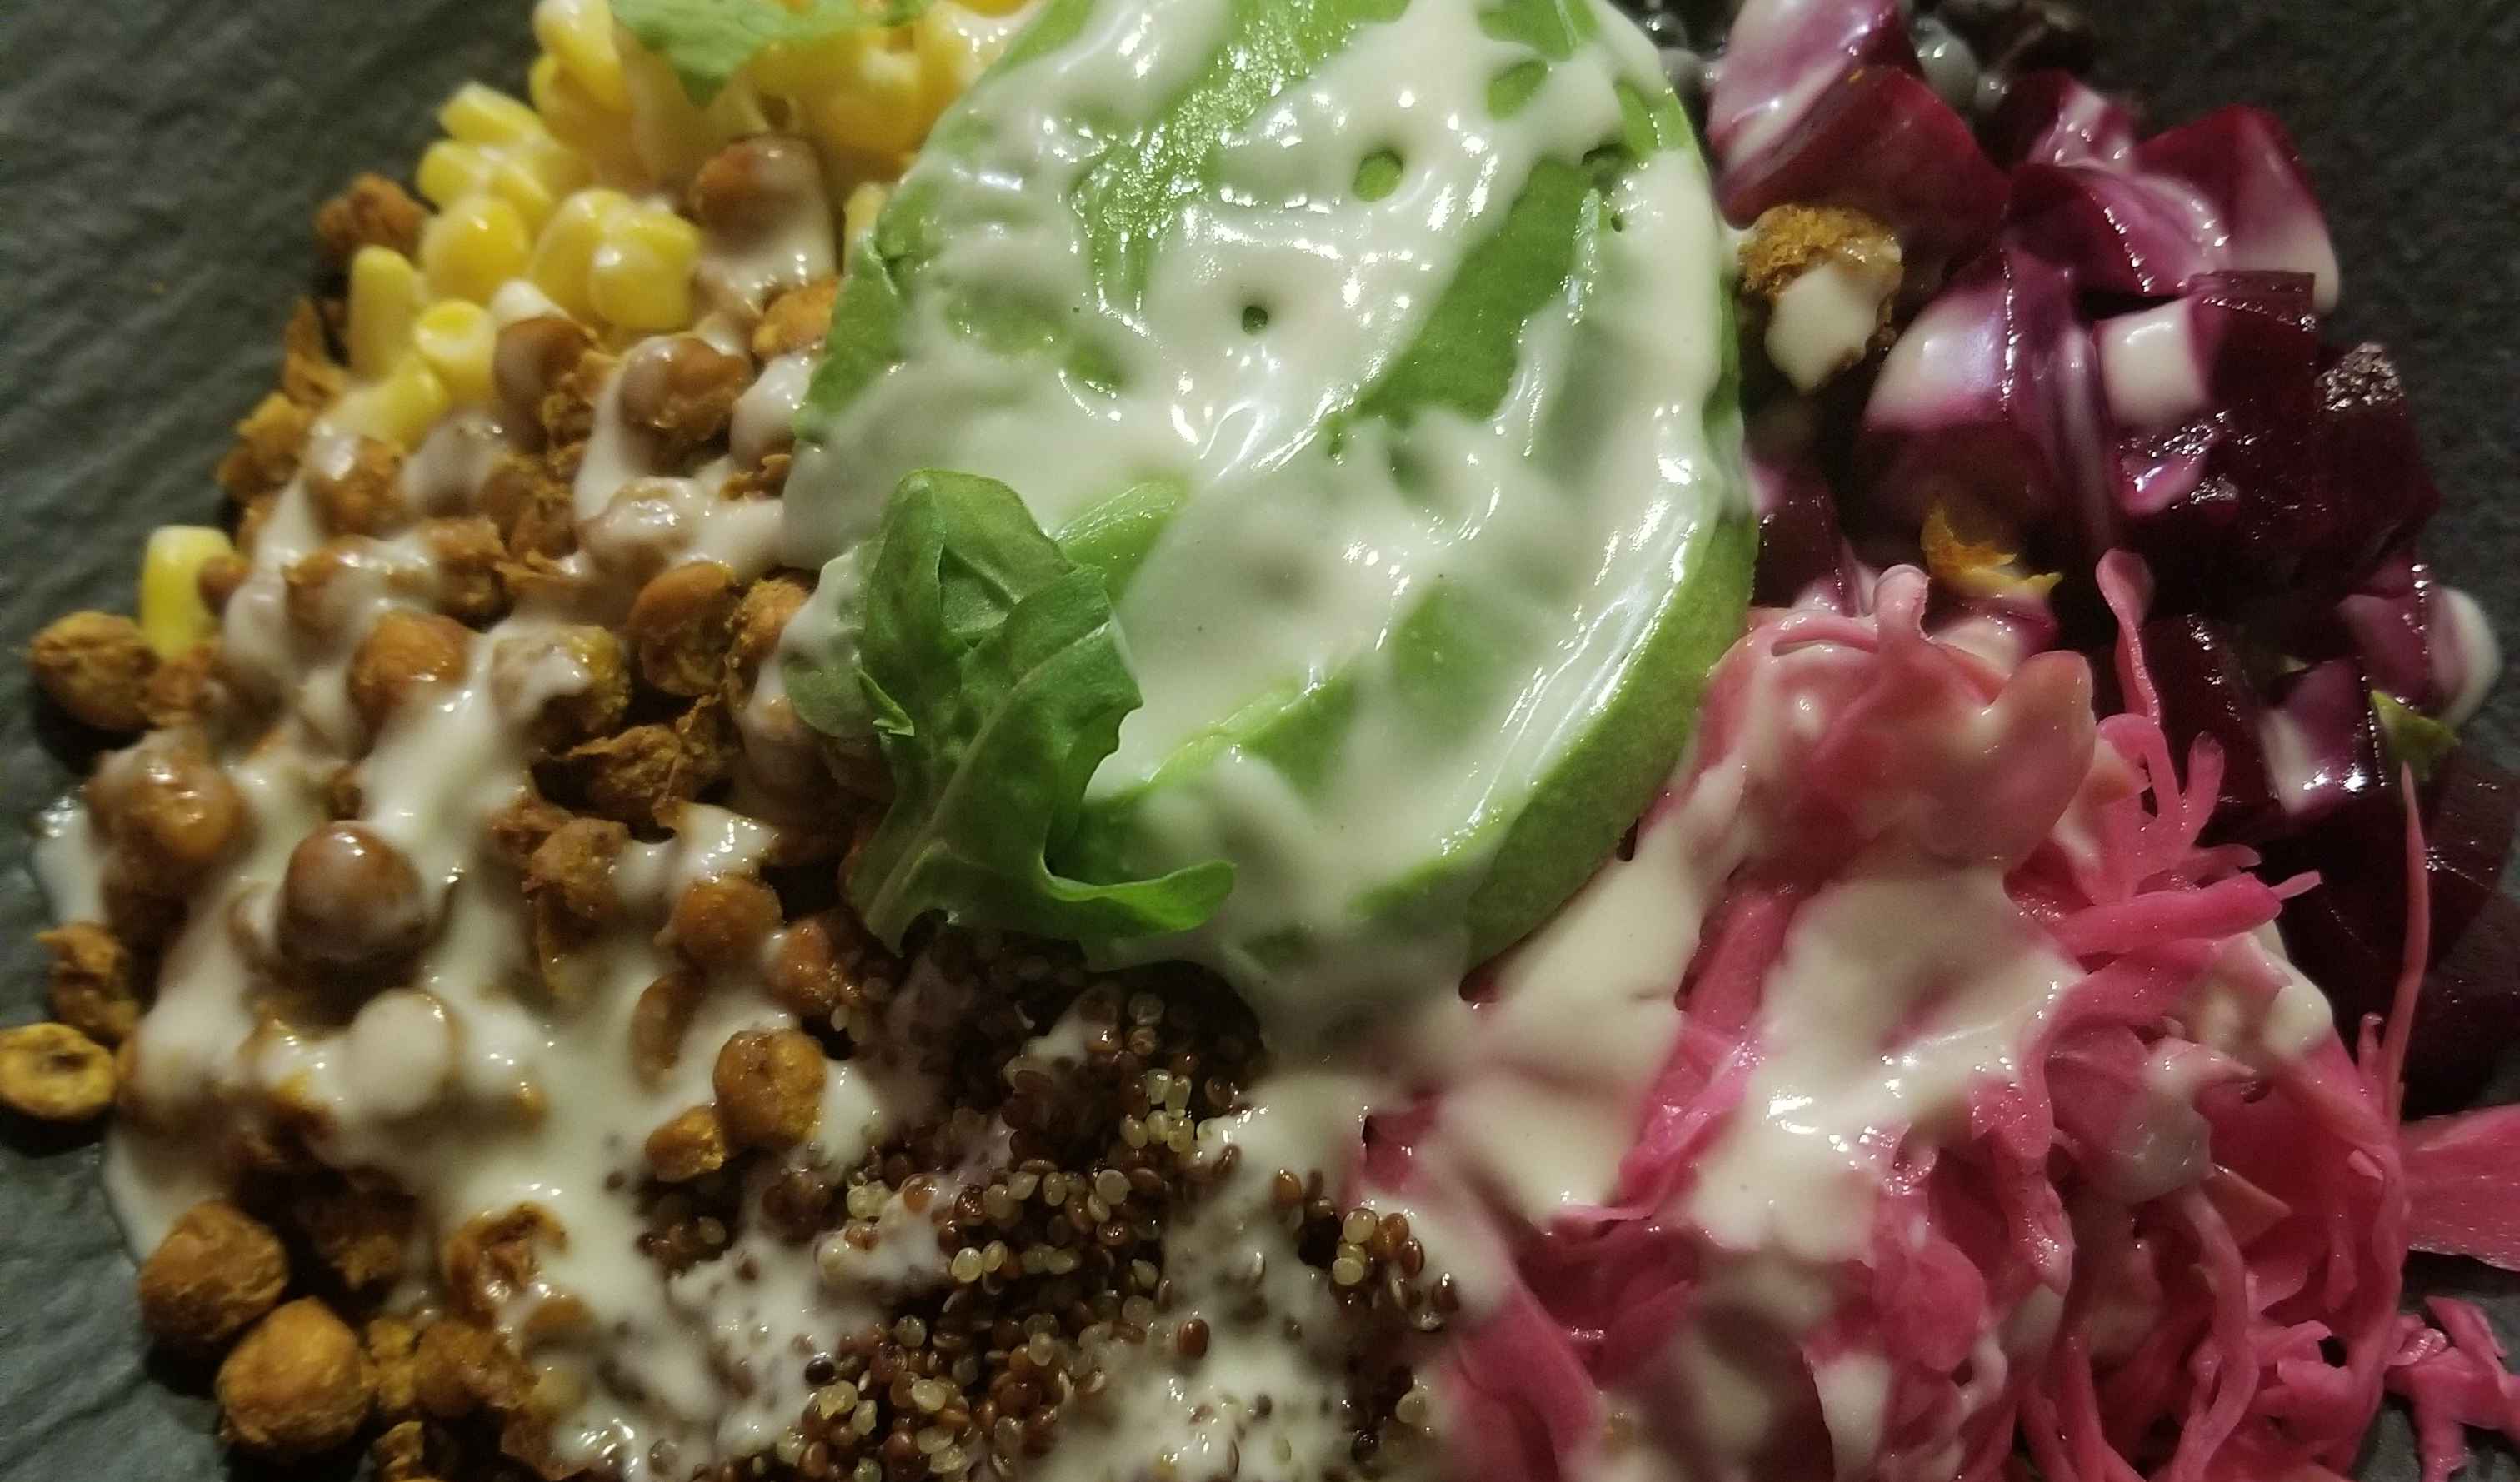 Quinoa, Chickpea, Avocado Salad